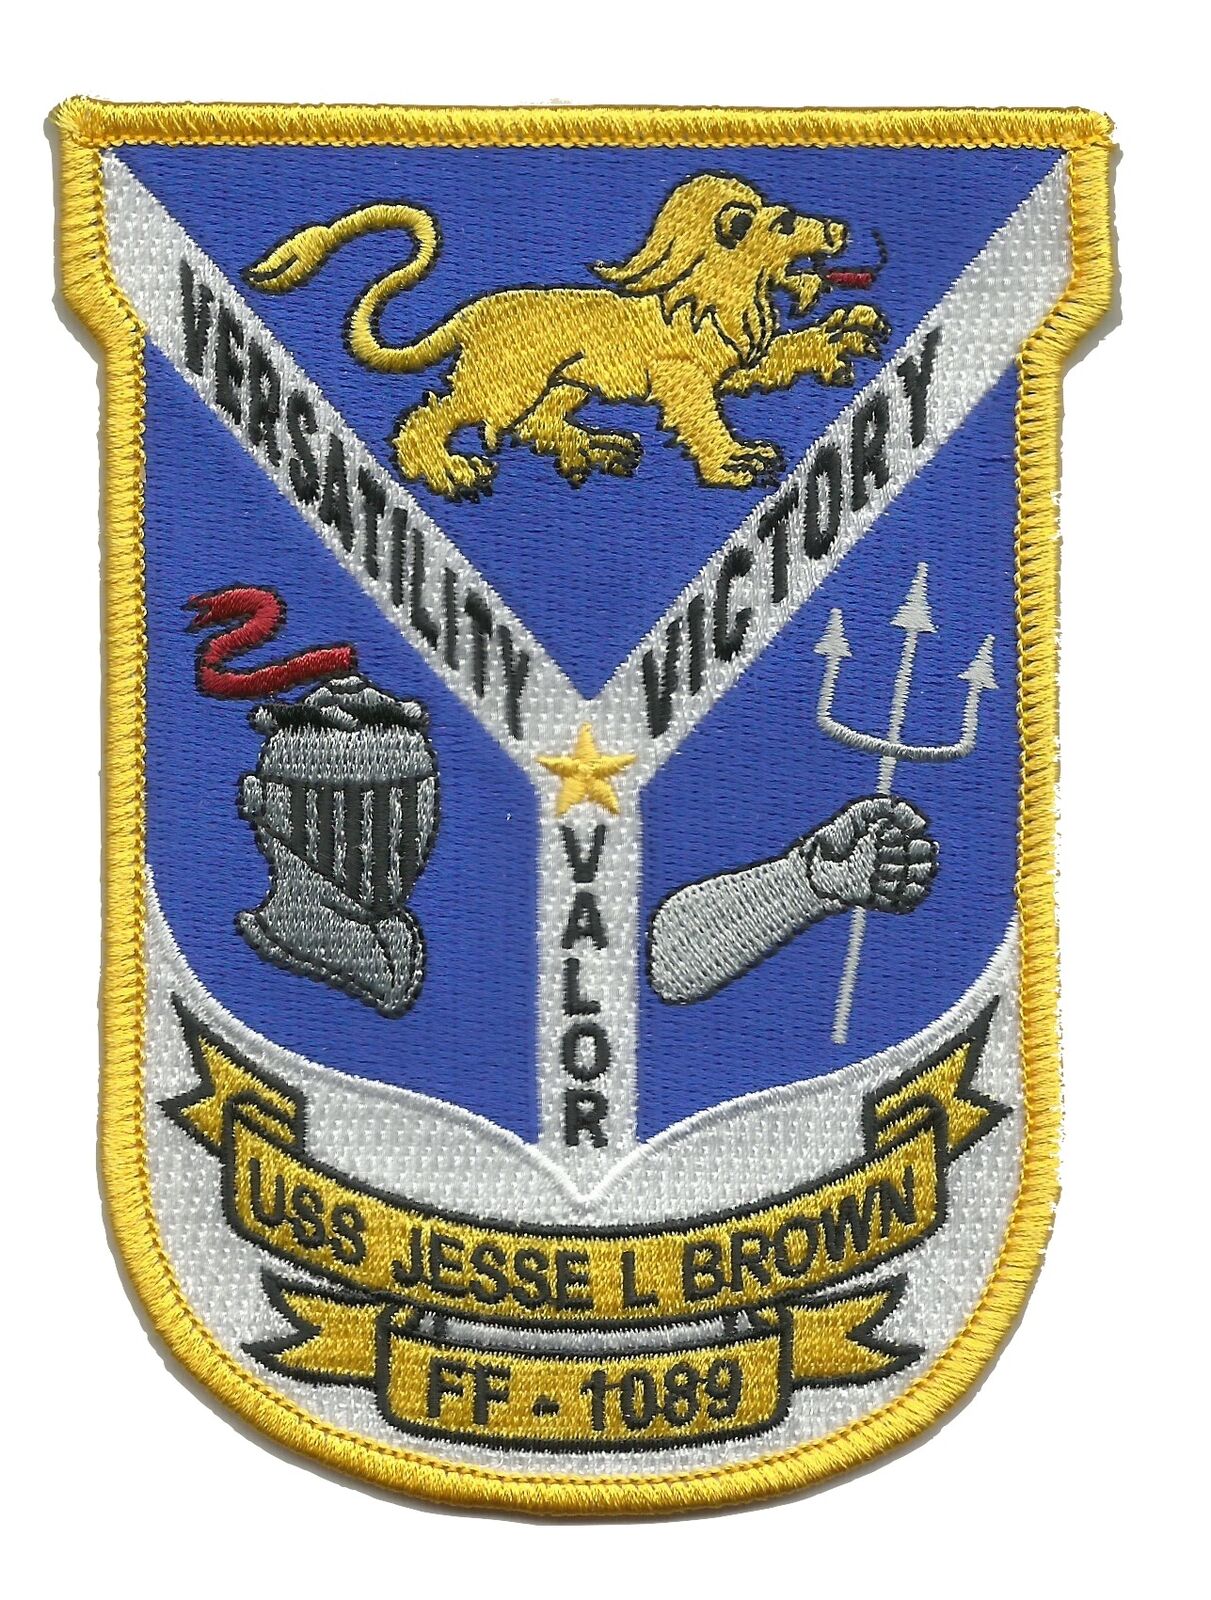 USS Jesse L. Brown FF-1089 Frigate Ship Patch